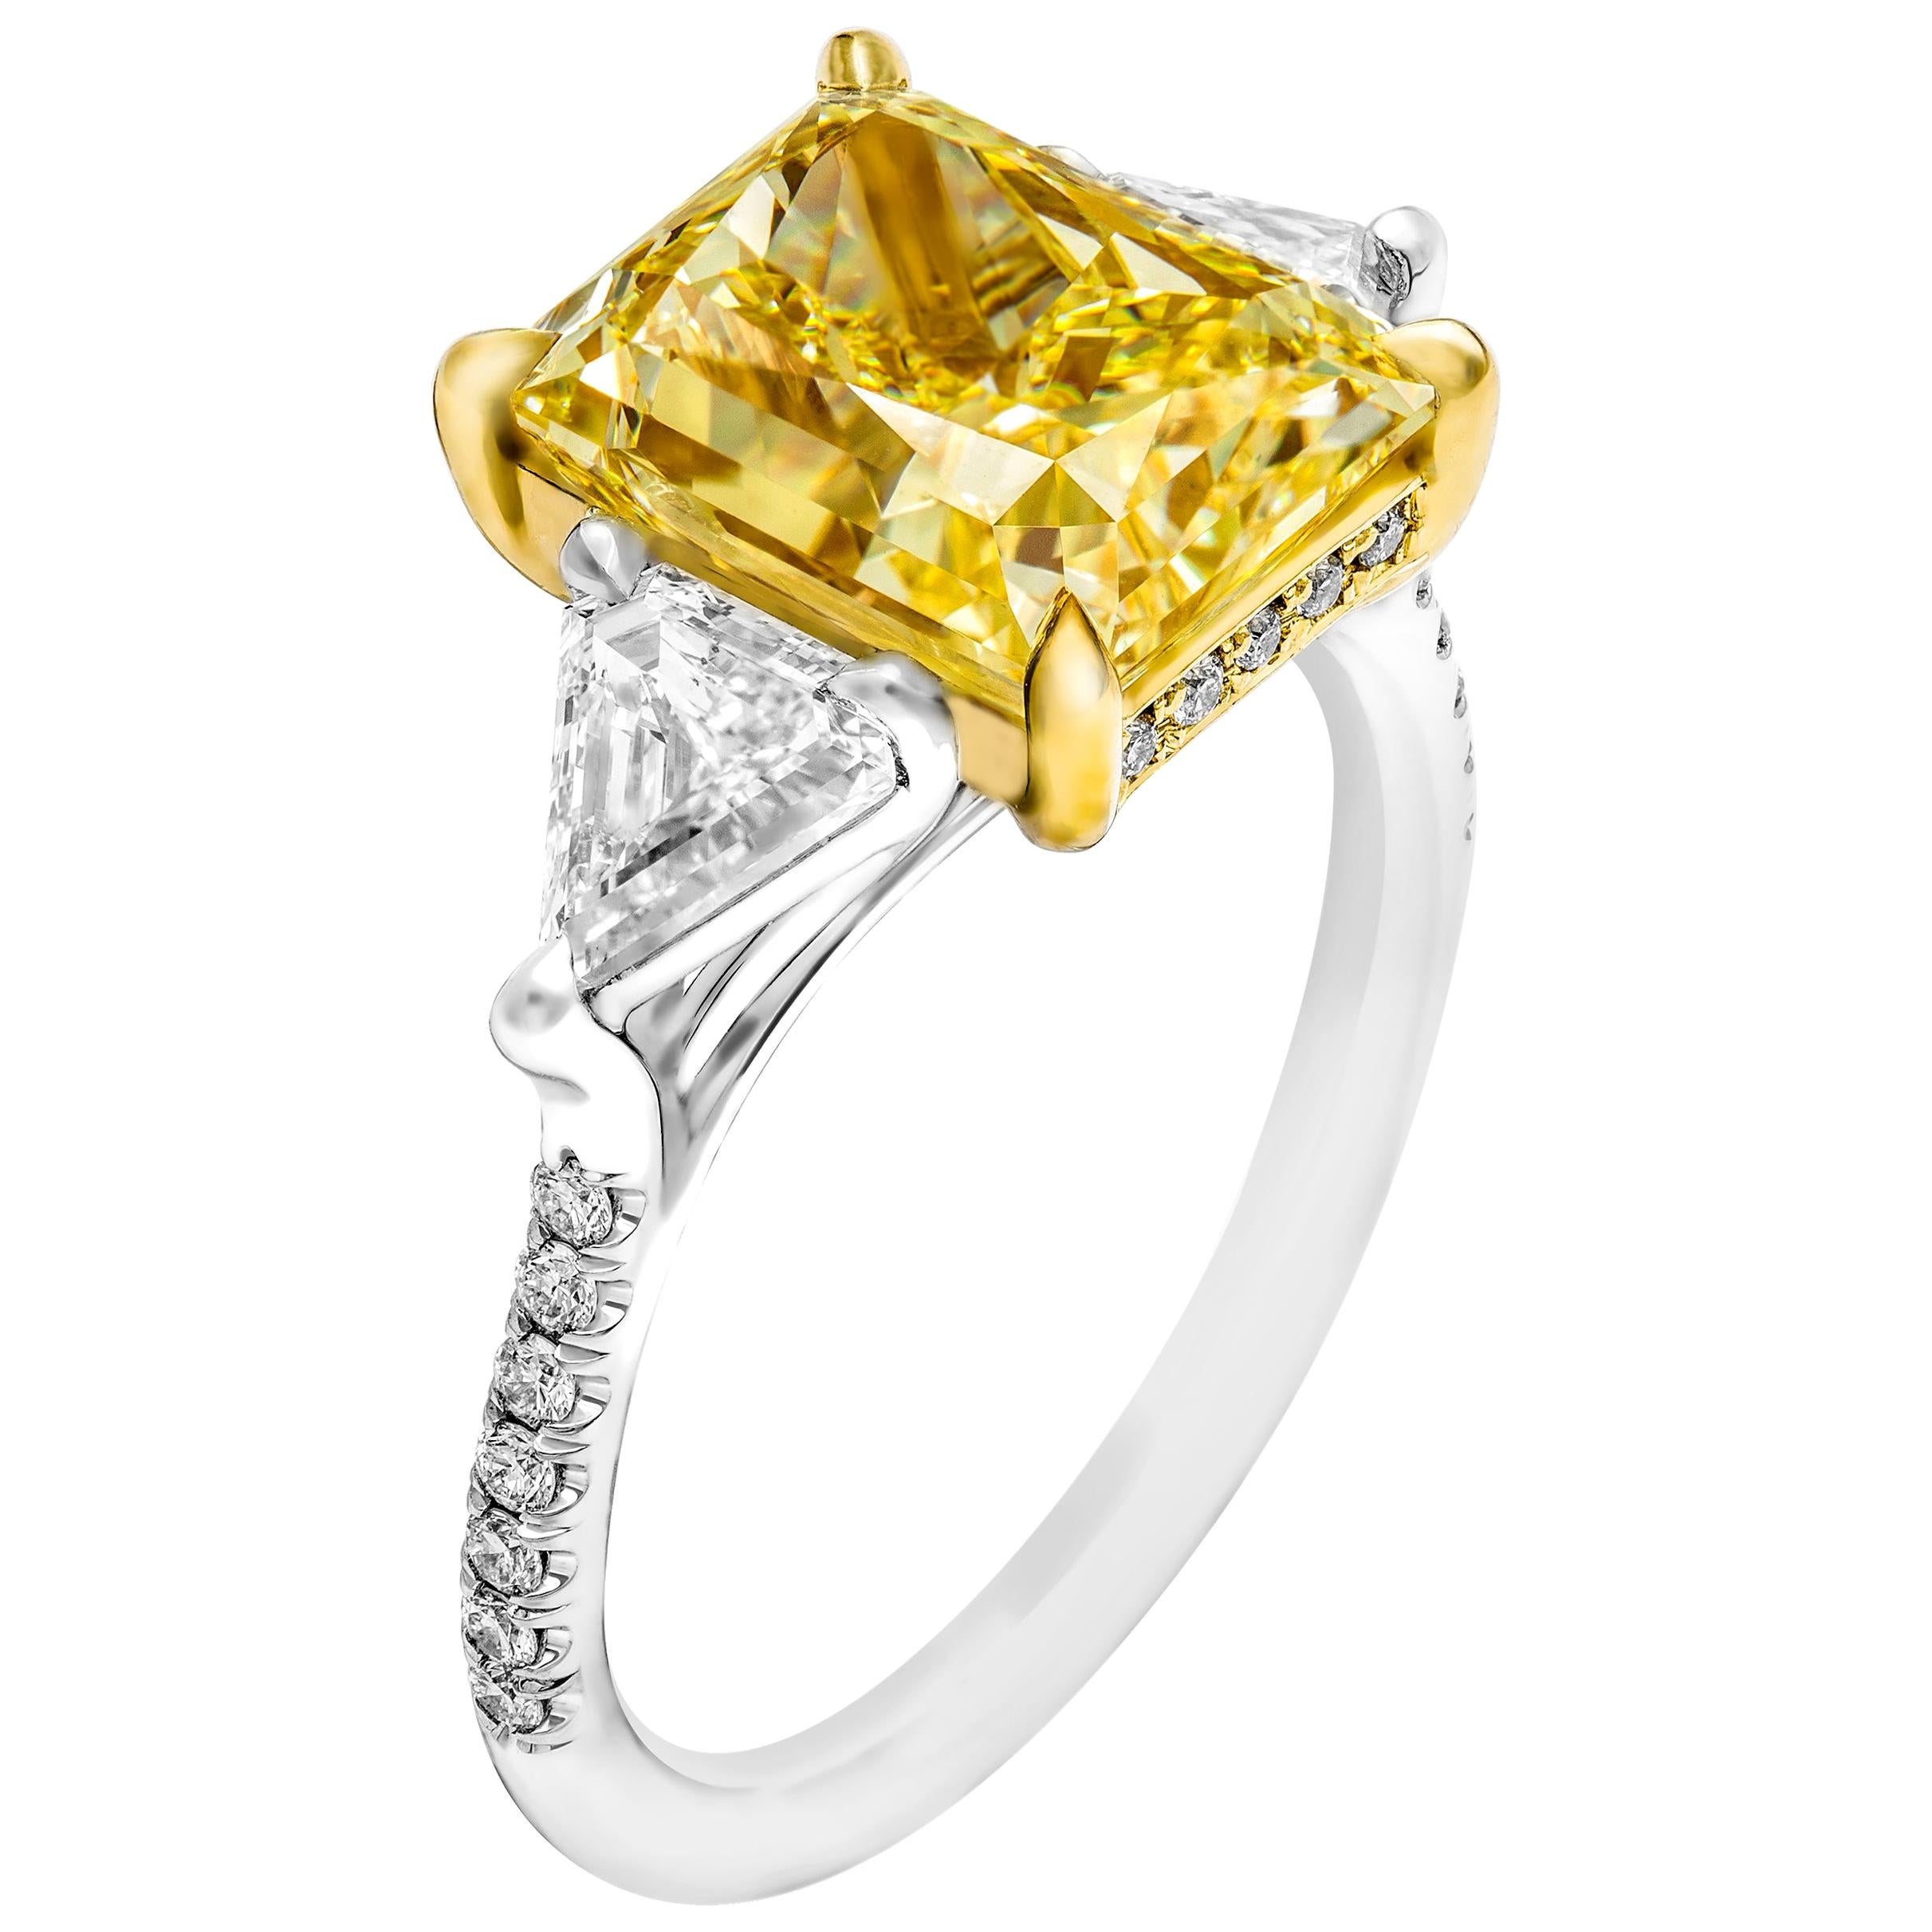 GIA Certified 4.51 Carat Fancy Light Yellow Diamond Cocktail Ring